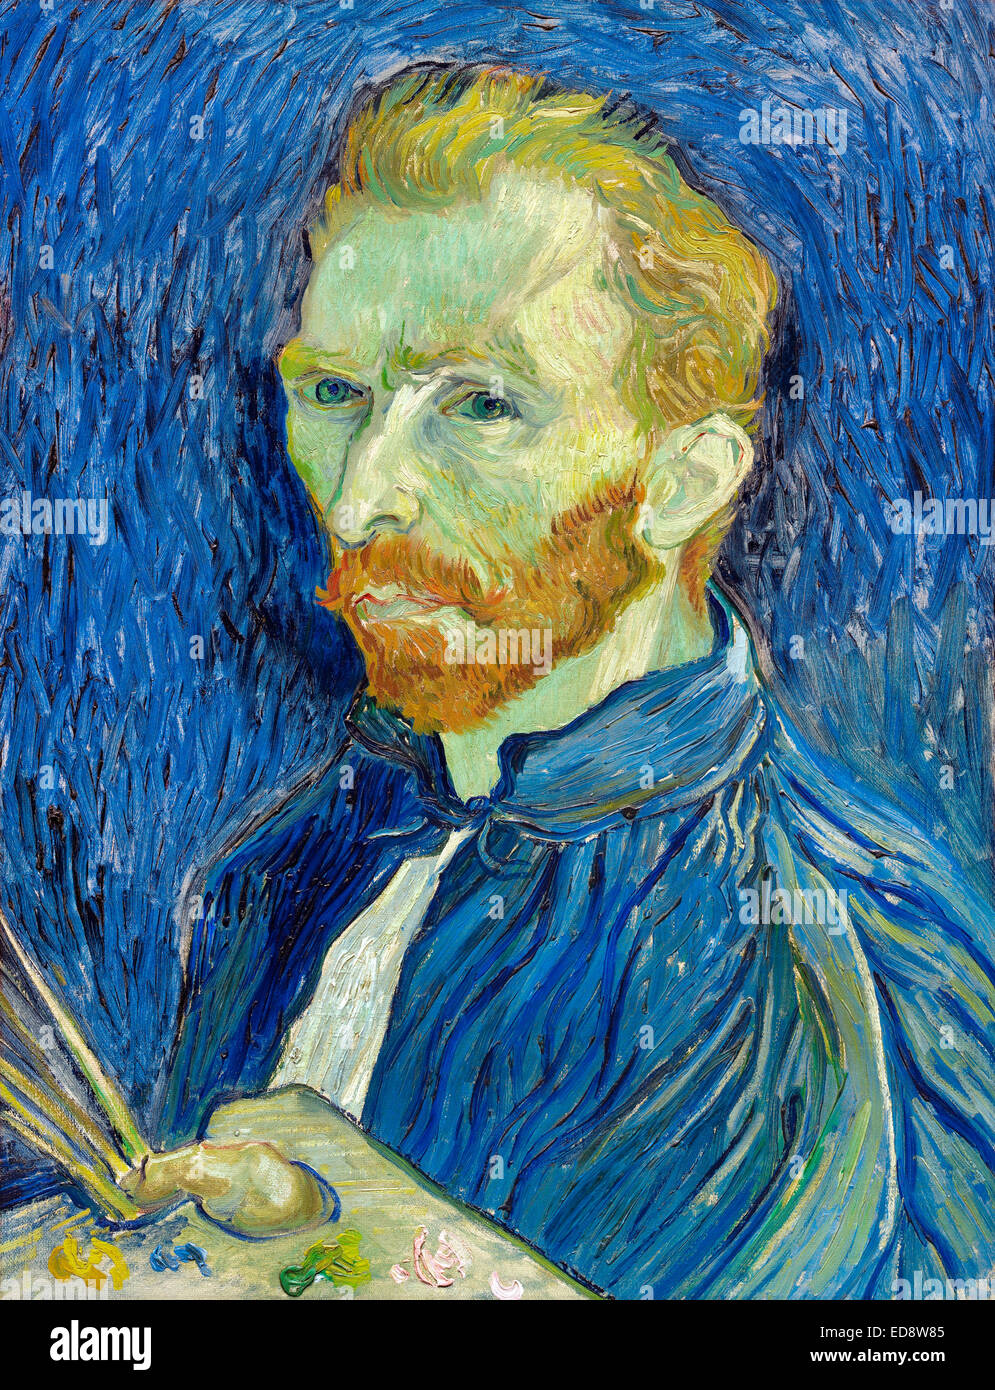 Vincent van Gogh: Self-Portrait 1889 Oil on canvas. National Gallery of Art, Washington, D.C., USA. Stock Photo